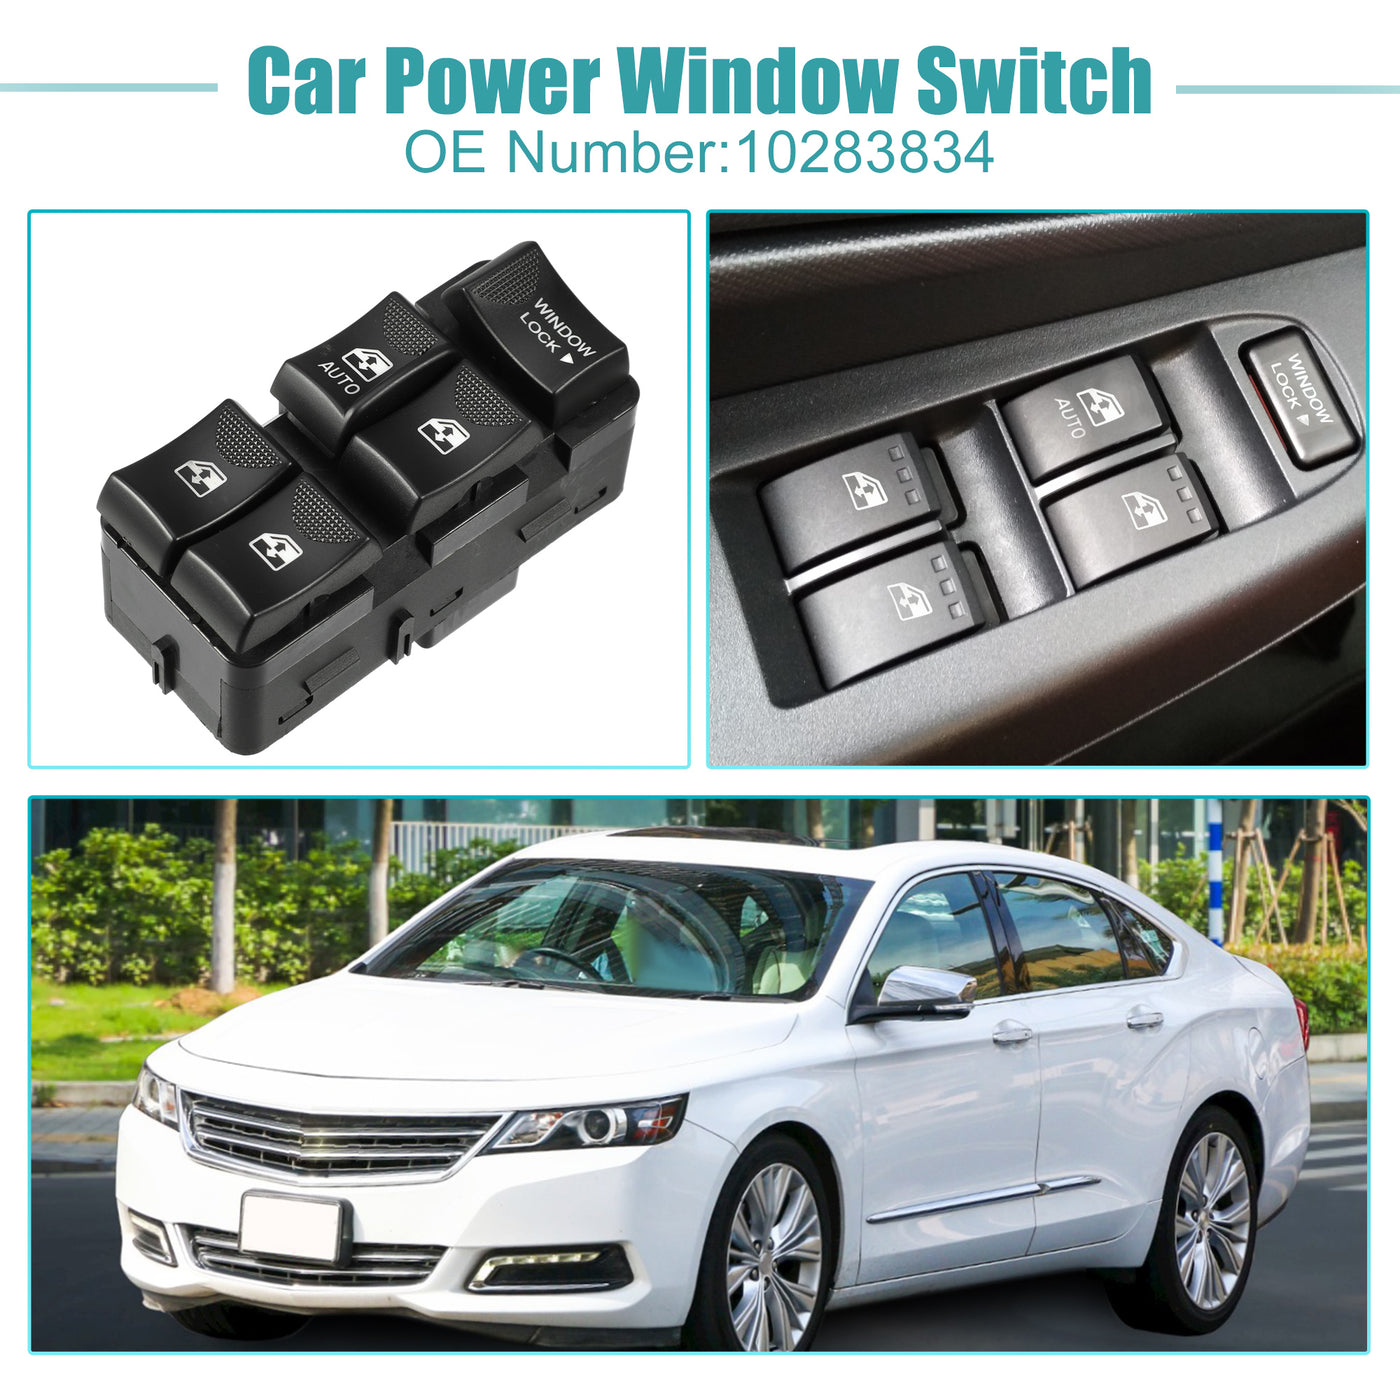 ACROPIX Power Window Switch Window Control Switch Fit for Chevrolet Impala 2000-2002 for Chevrolet Impala 2004 2005 Base No.10283834 - Pack of 1